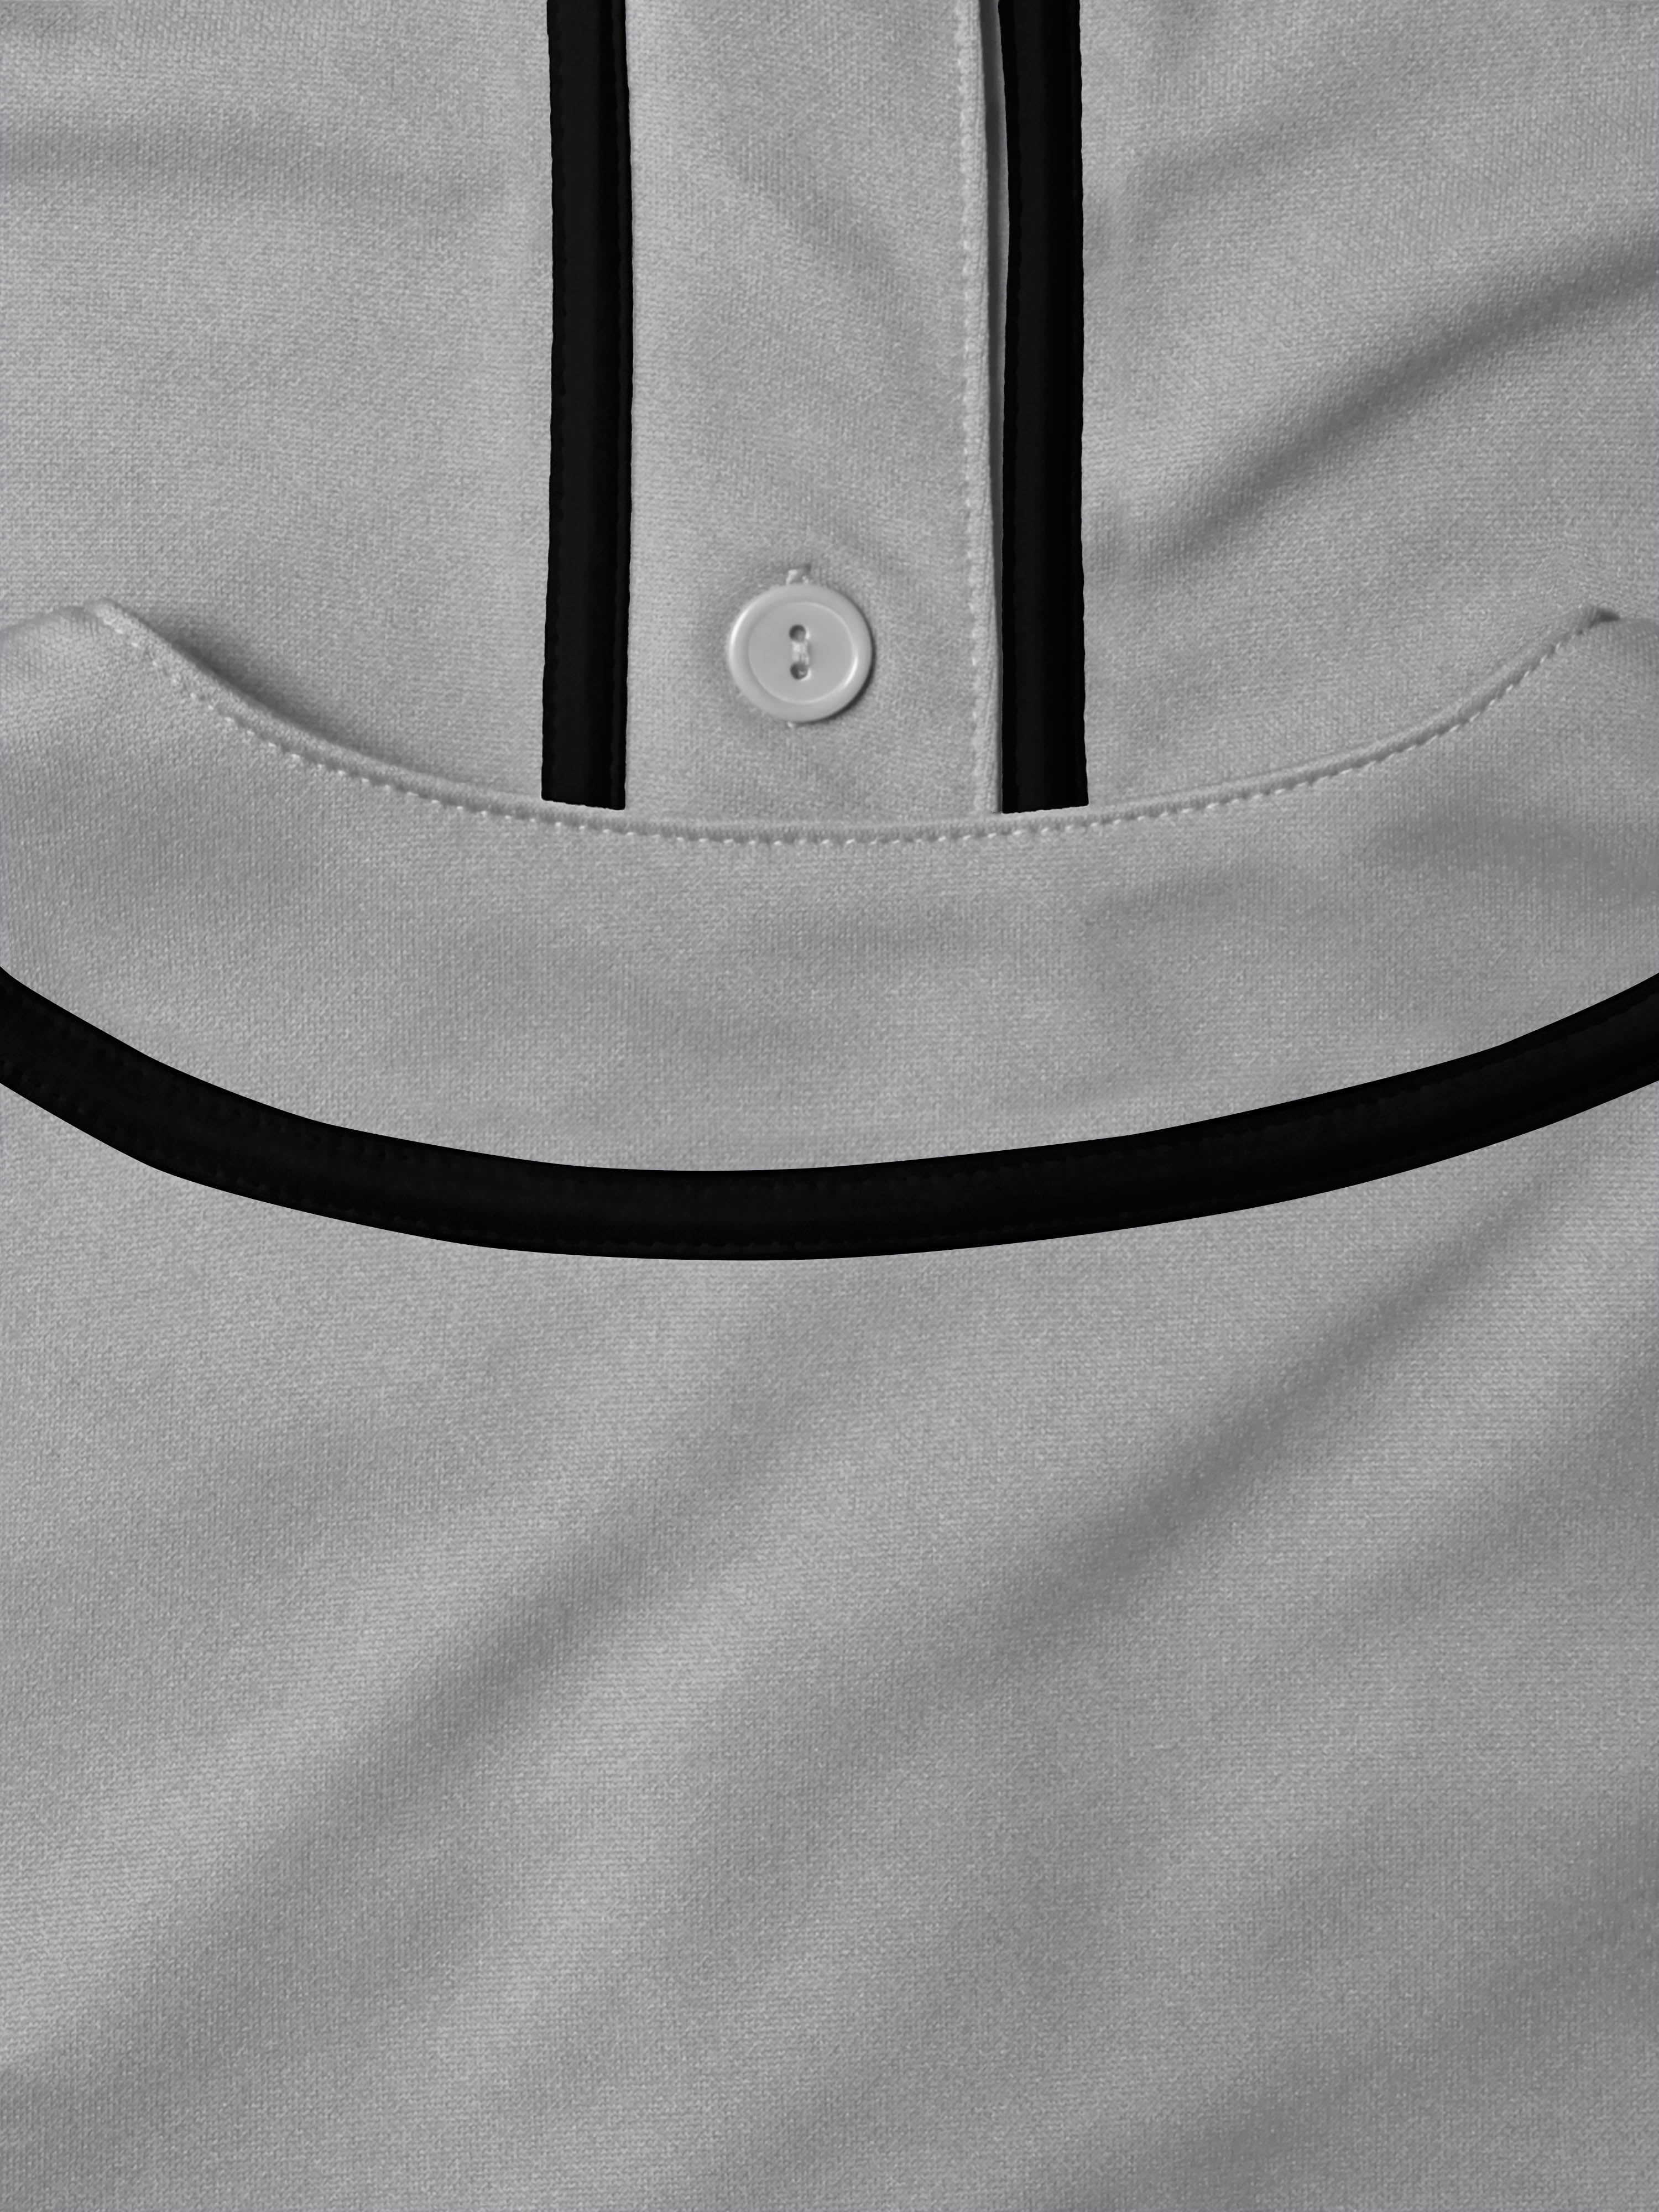 Mens Team Sports Printable Blank Baseball Jersey Collar Button Up Shirts - Men > T-shirts & Tank Tops > Baseball Jersey | Hat and Beyond 3X-Large /